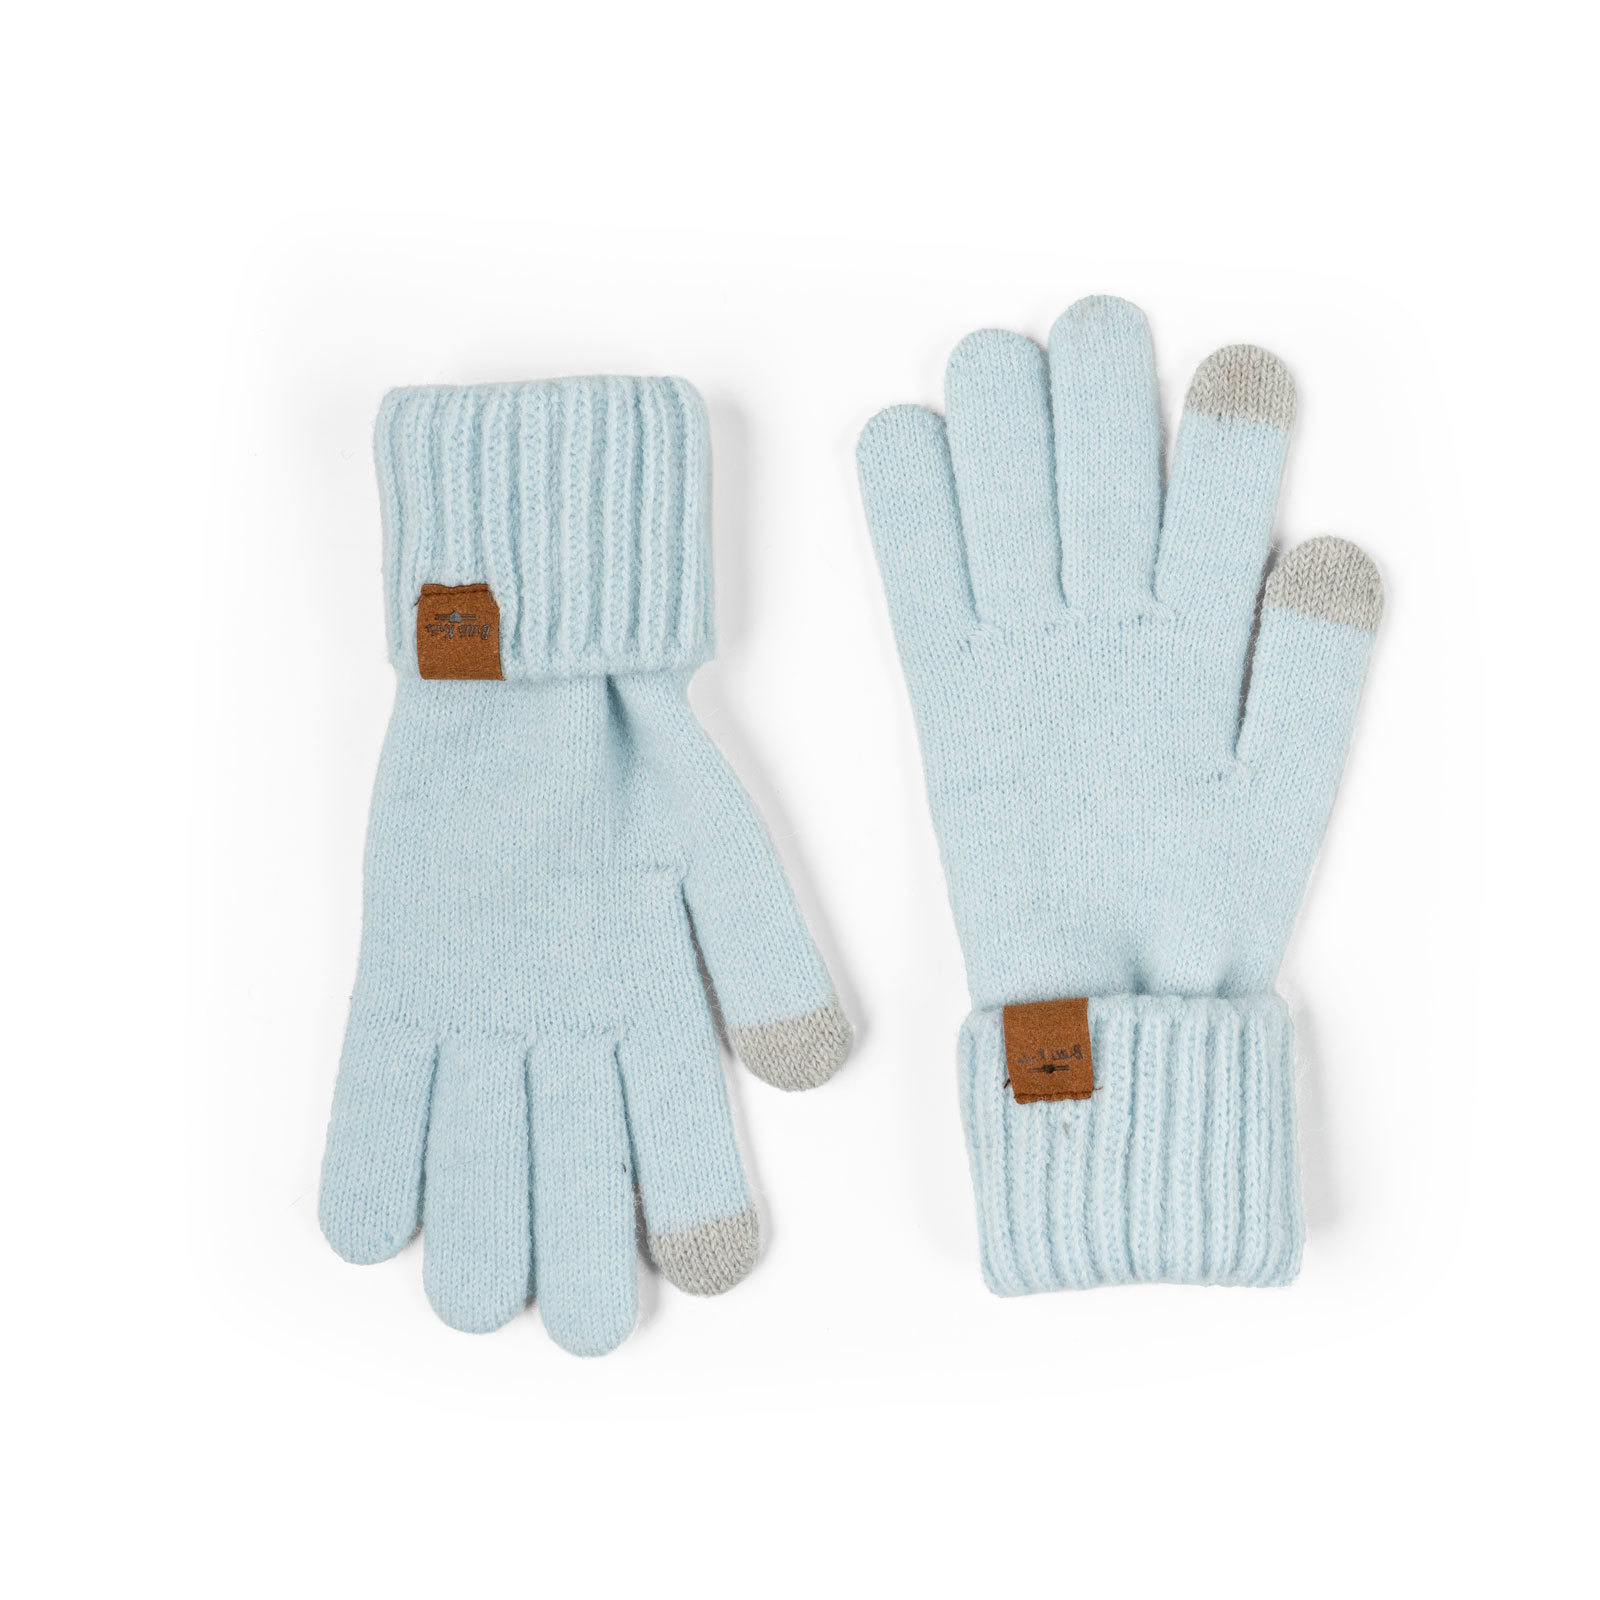 Britt's Knits Ultra-Soft Stretch Knit Women's Warm Winter Gloves 2